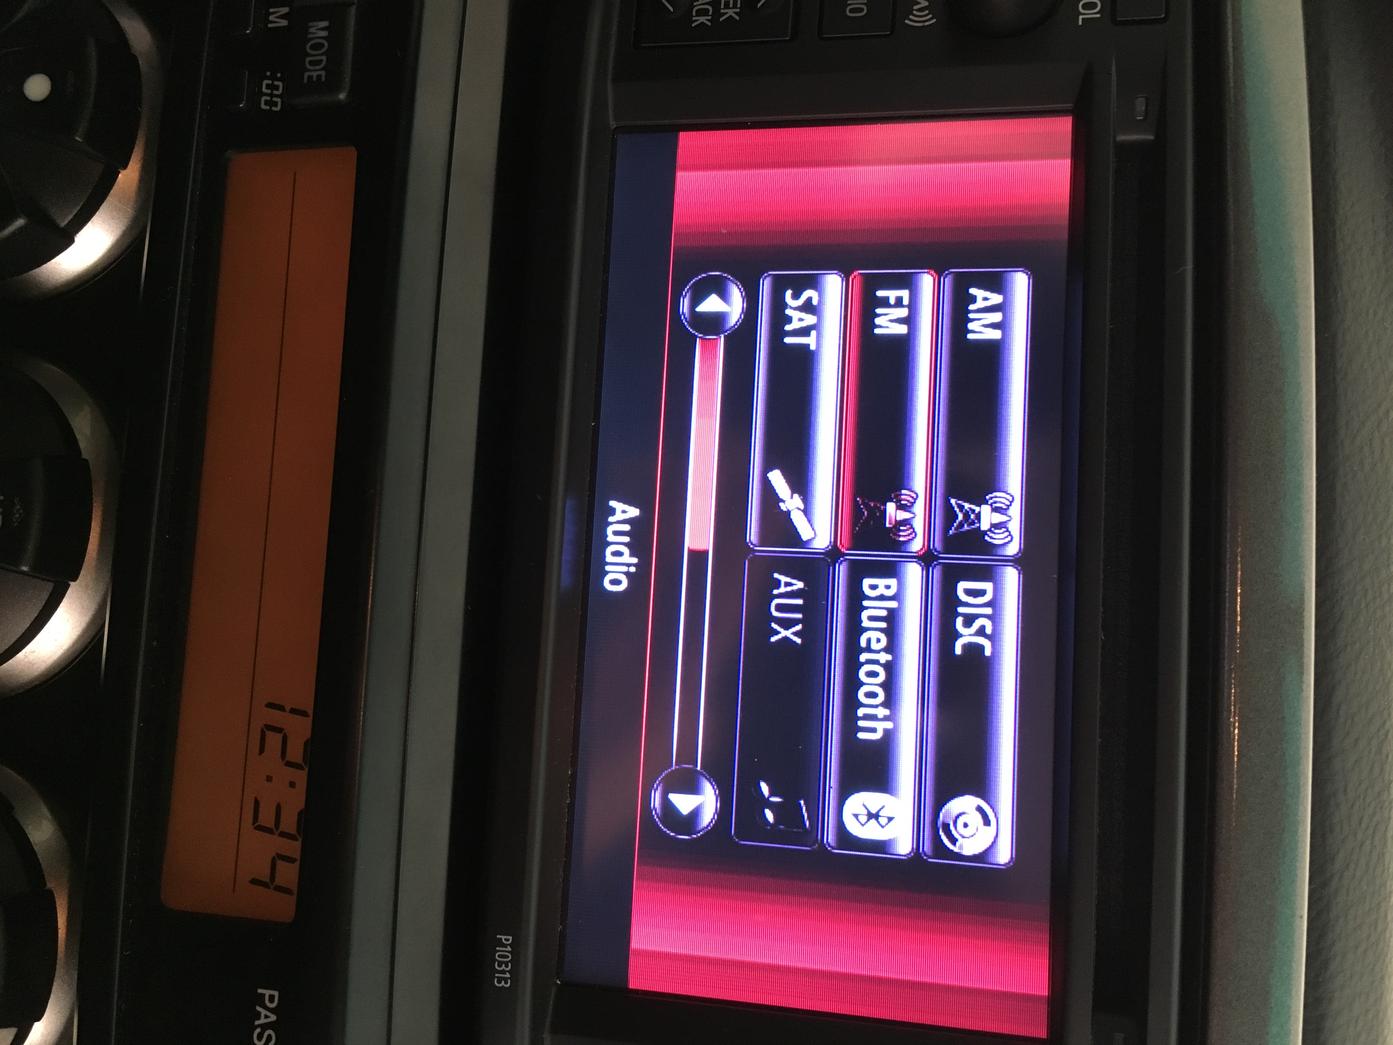 2013 Corolla Entune Radio installed in 2006 4Runner-003-jpg